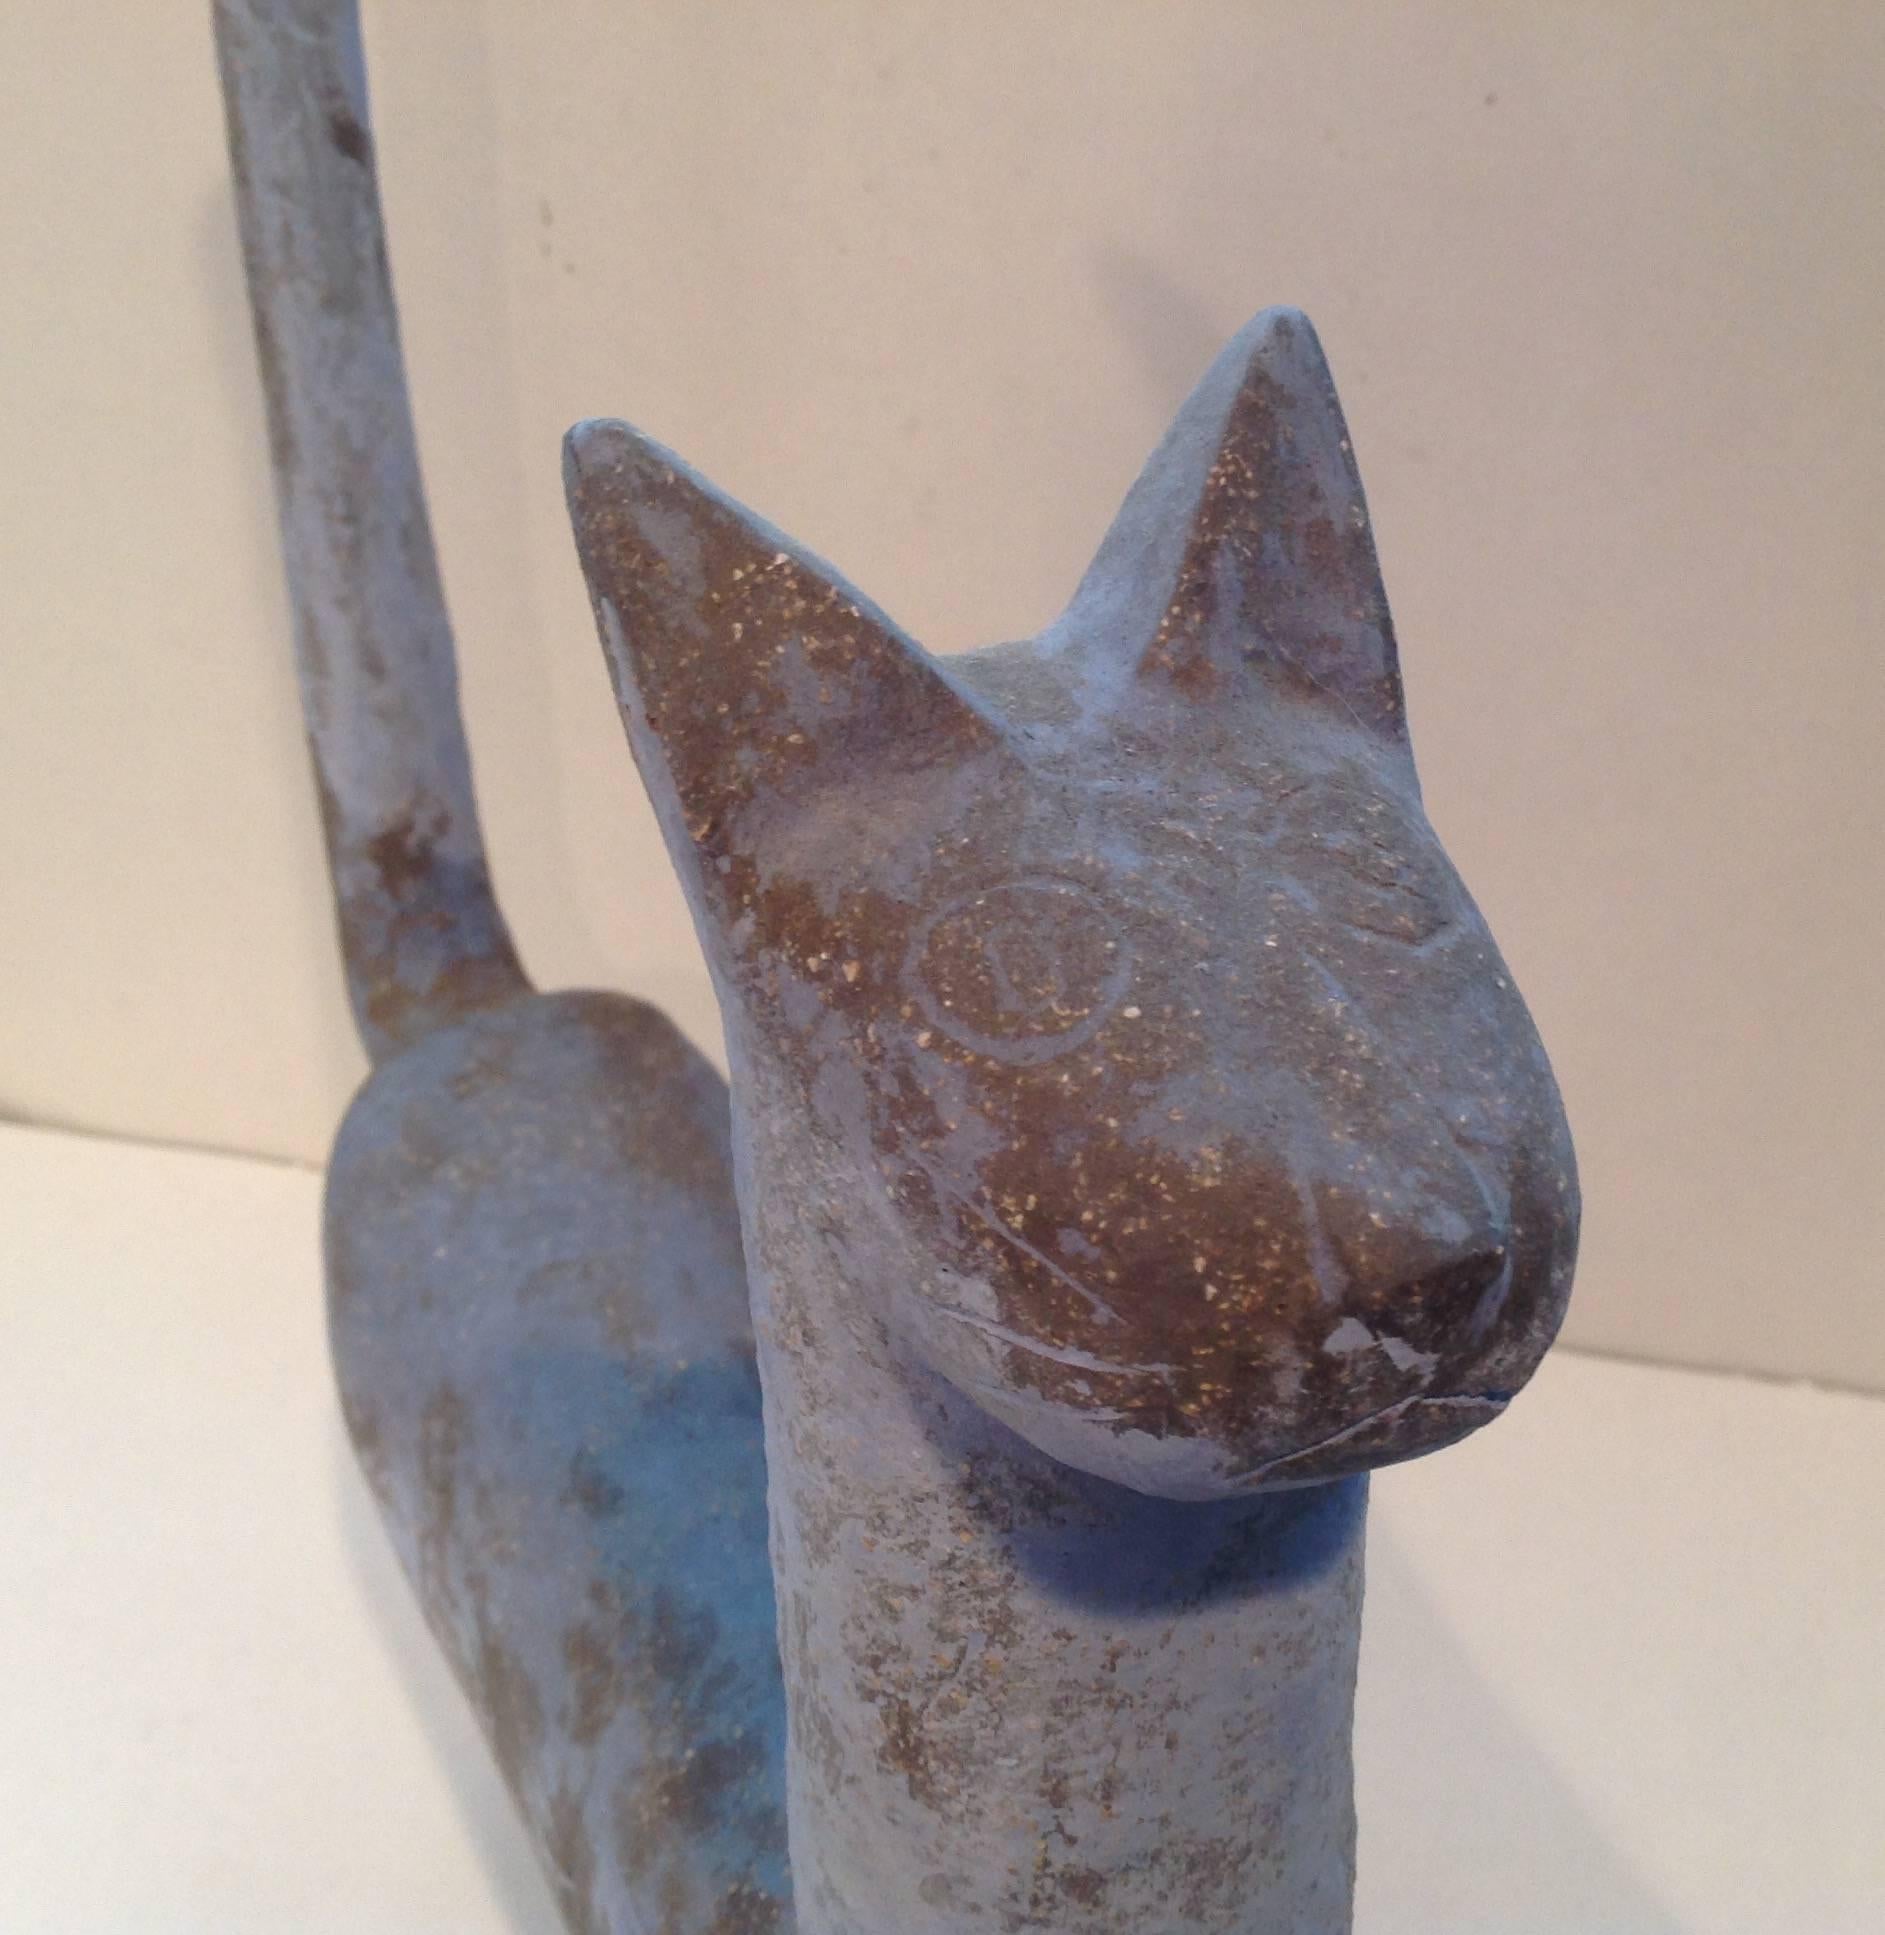 Amazing Mid-Century Modern pottery cat sculpture by Leza McVey. Original artist signature as pictured.